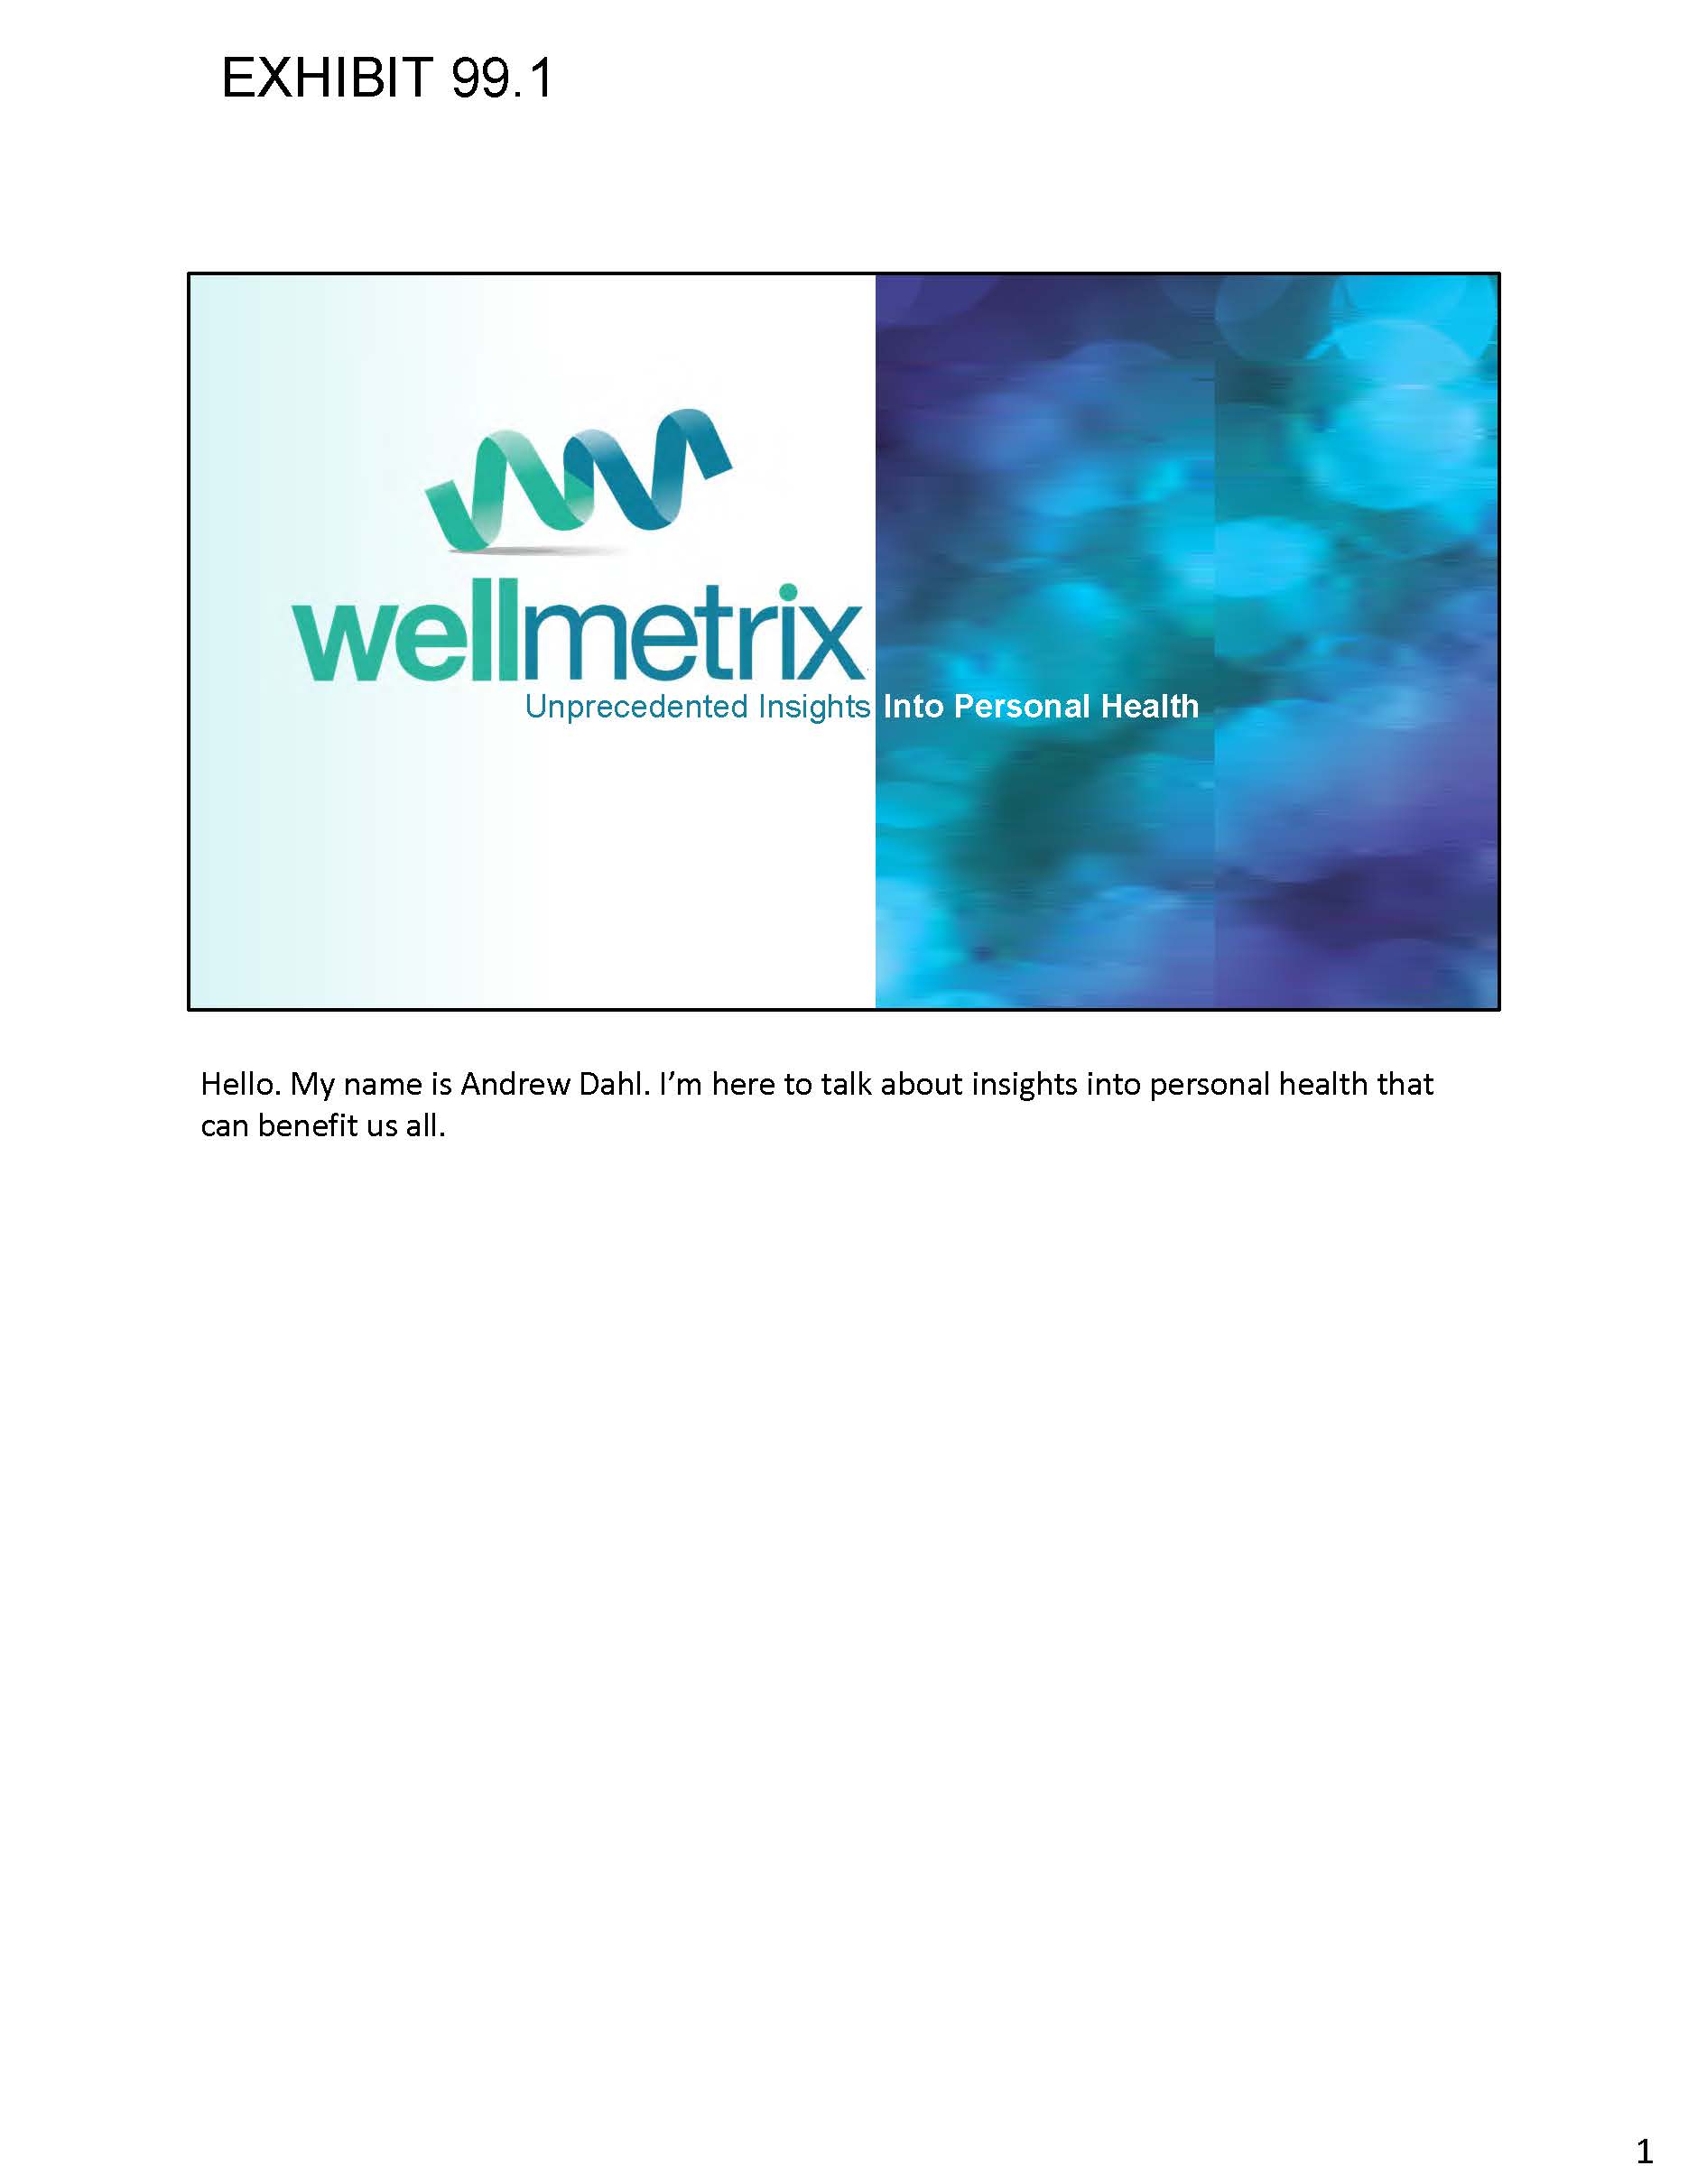 WellMetrix Jan 10 2018 Exhibitv1_Page_01.jpg